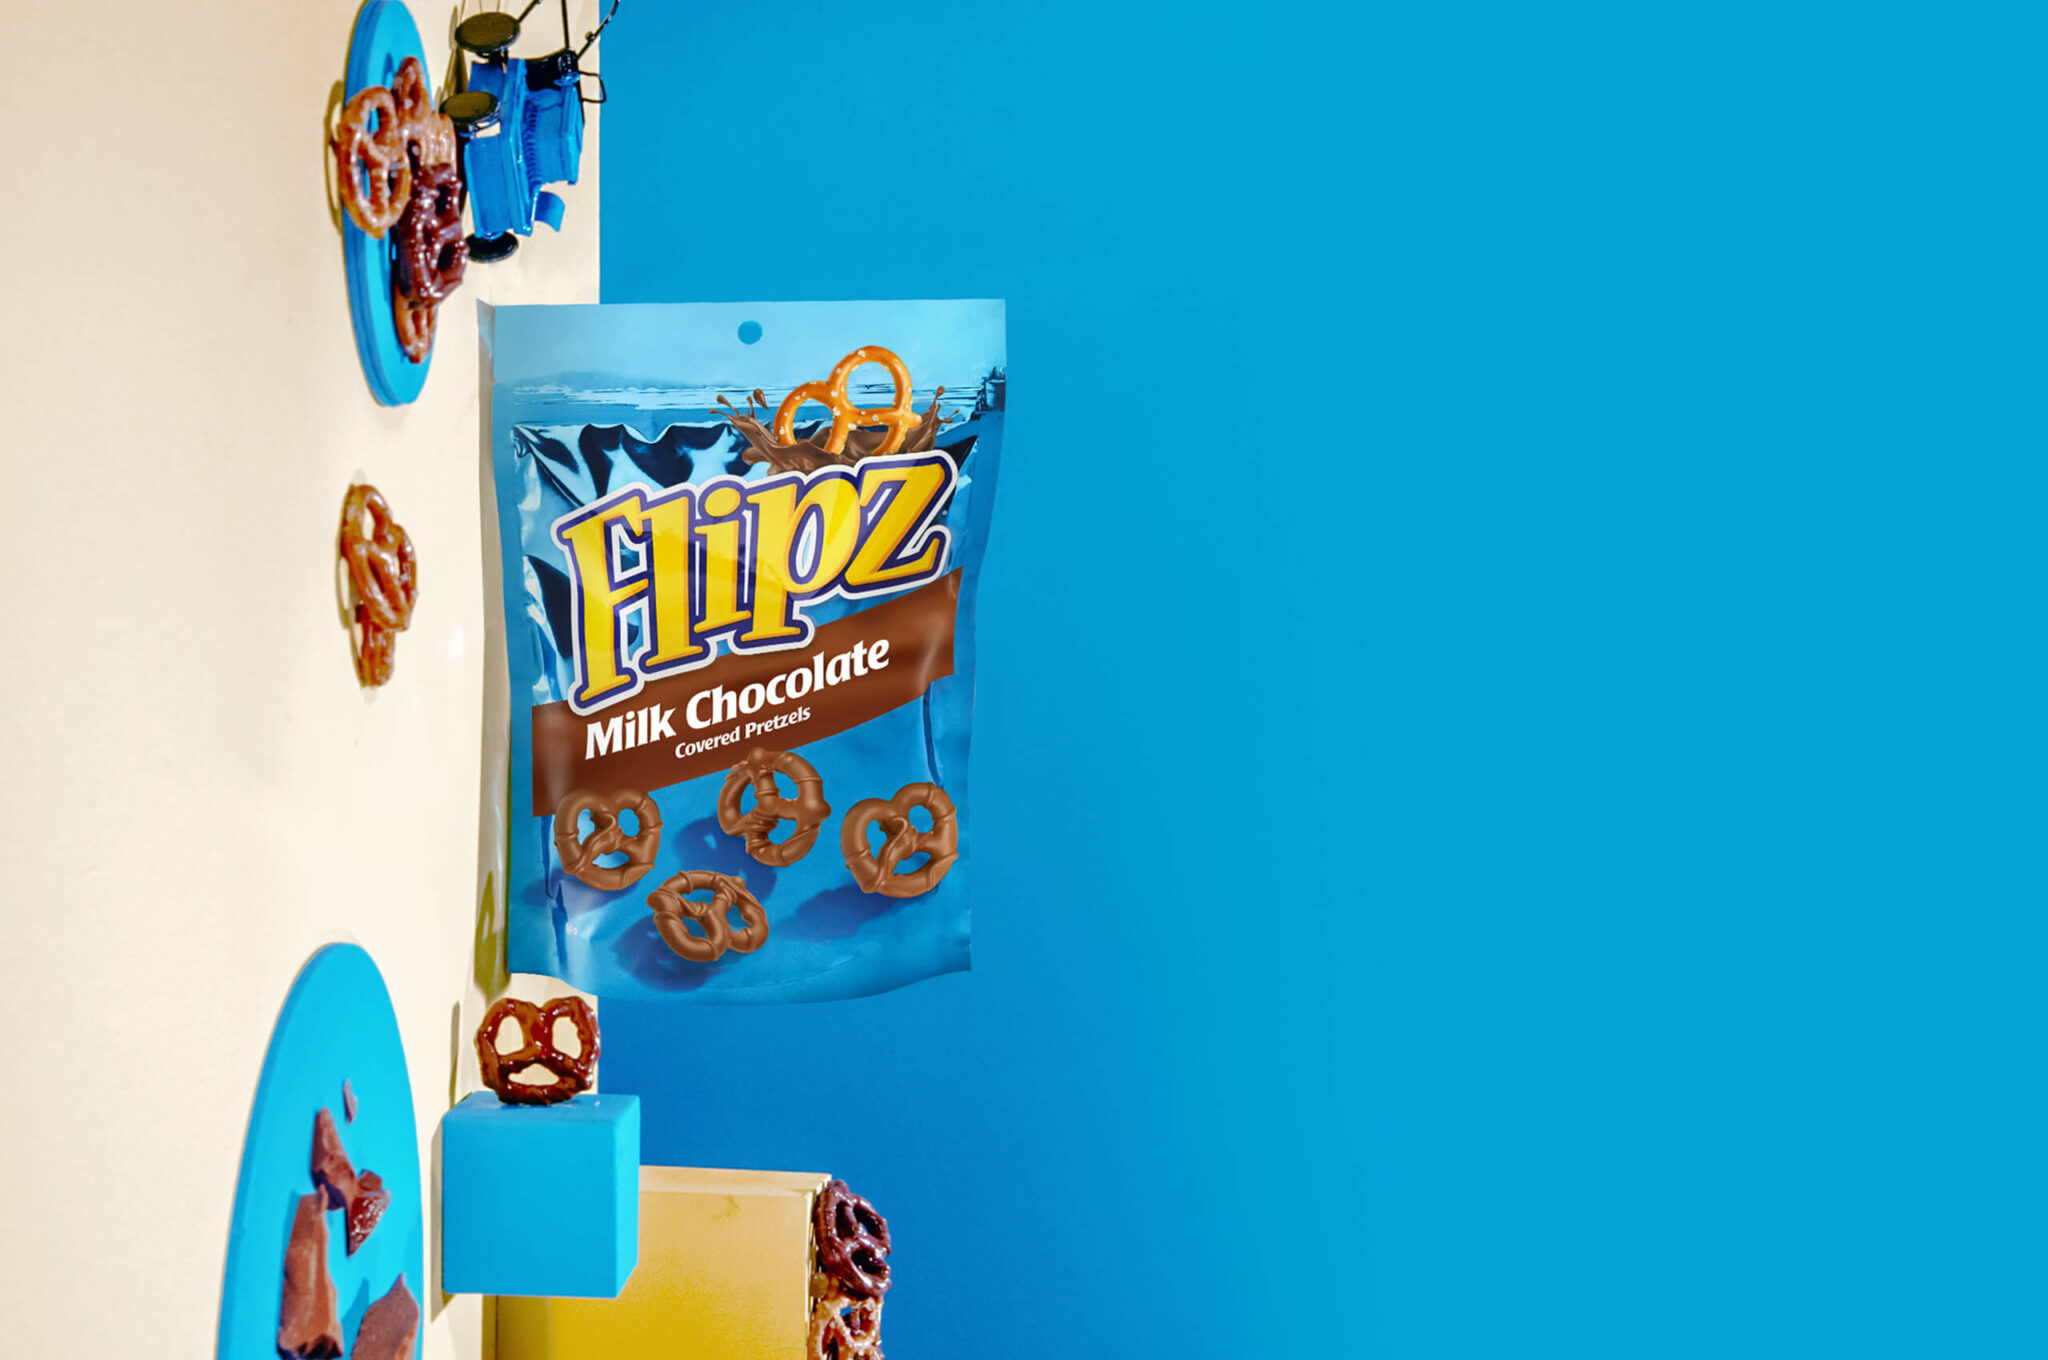 Flipz chocolate covered pretzels in blue bag